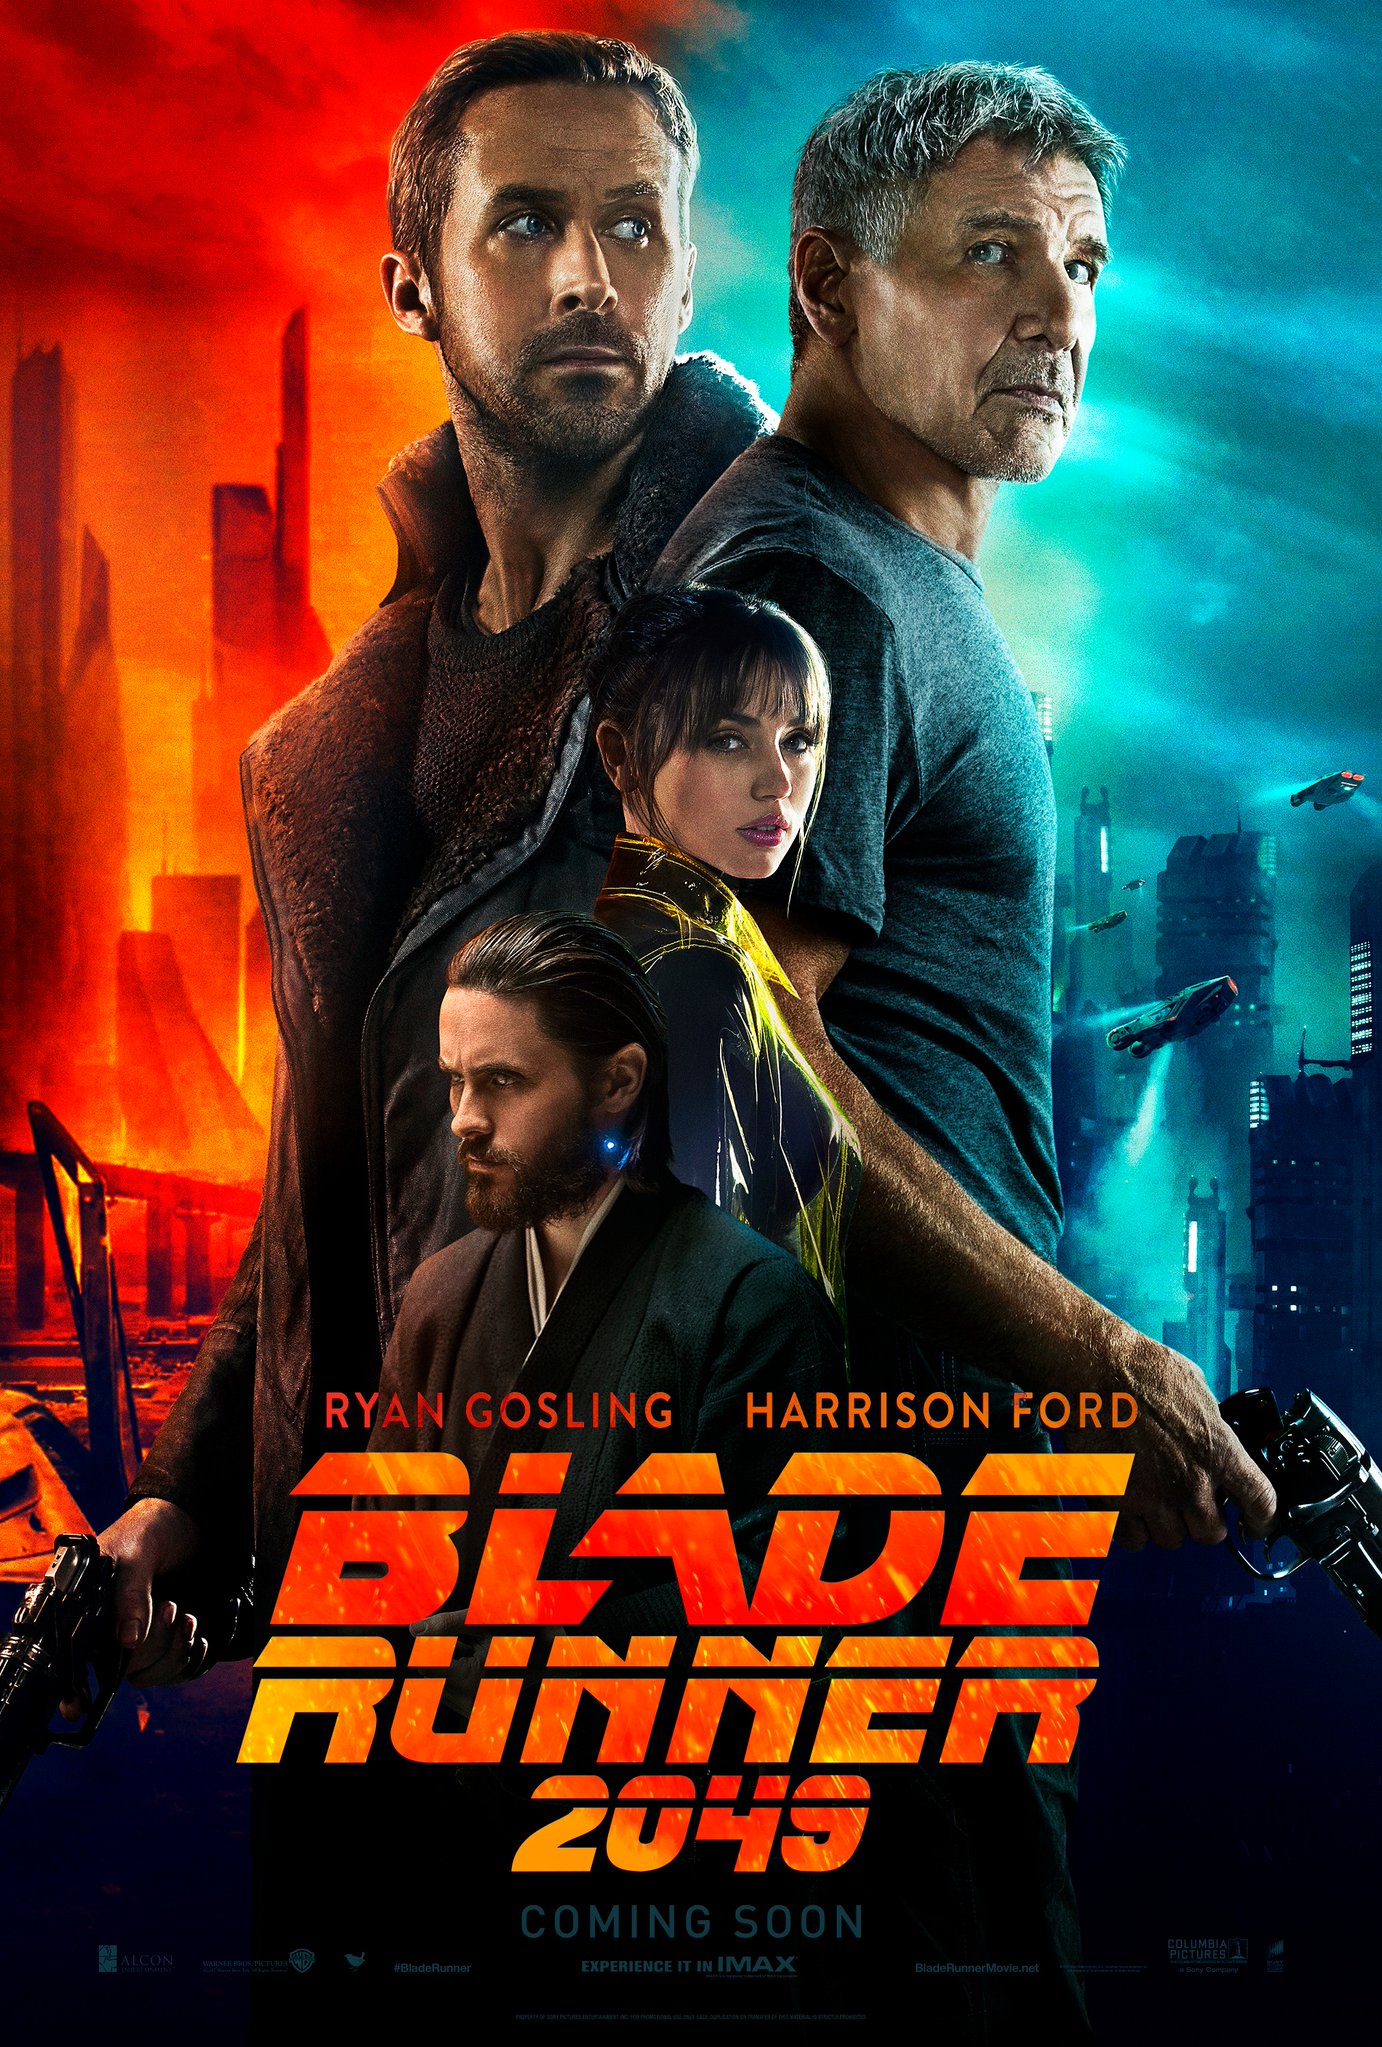 Blade Runner 2049 stars Ryan Gosling, Harrison Ford, Ana de Armas, Jared Leto, Sylvia Hoeks and Robin Wright